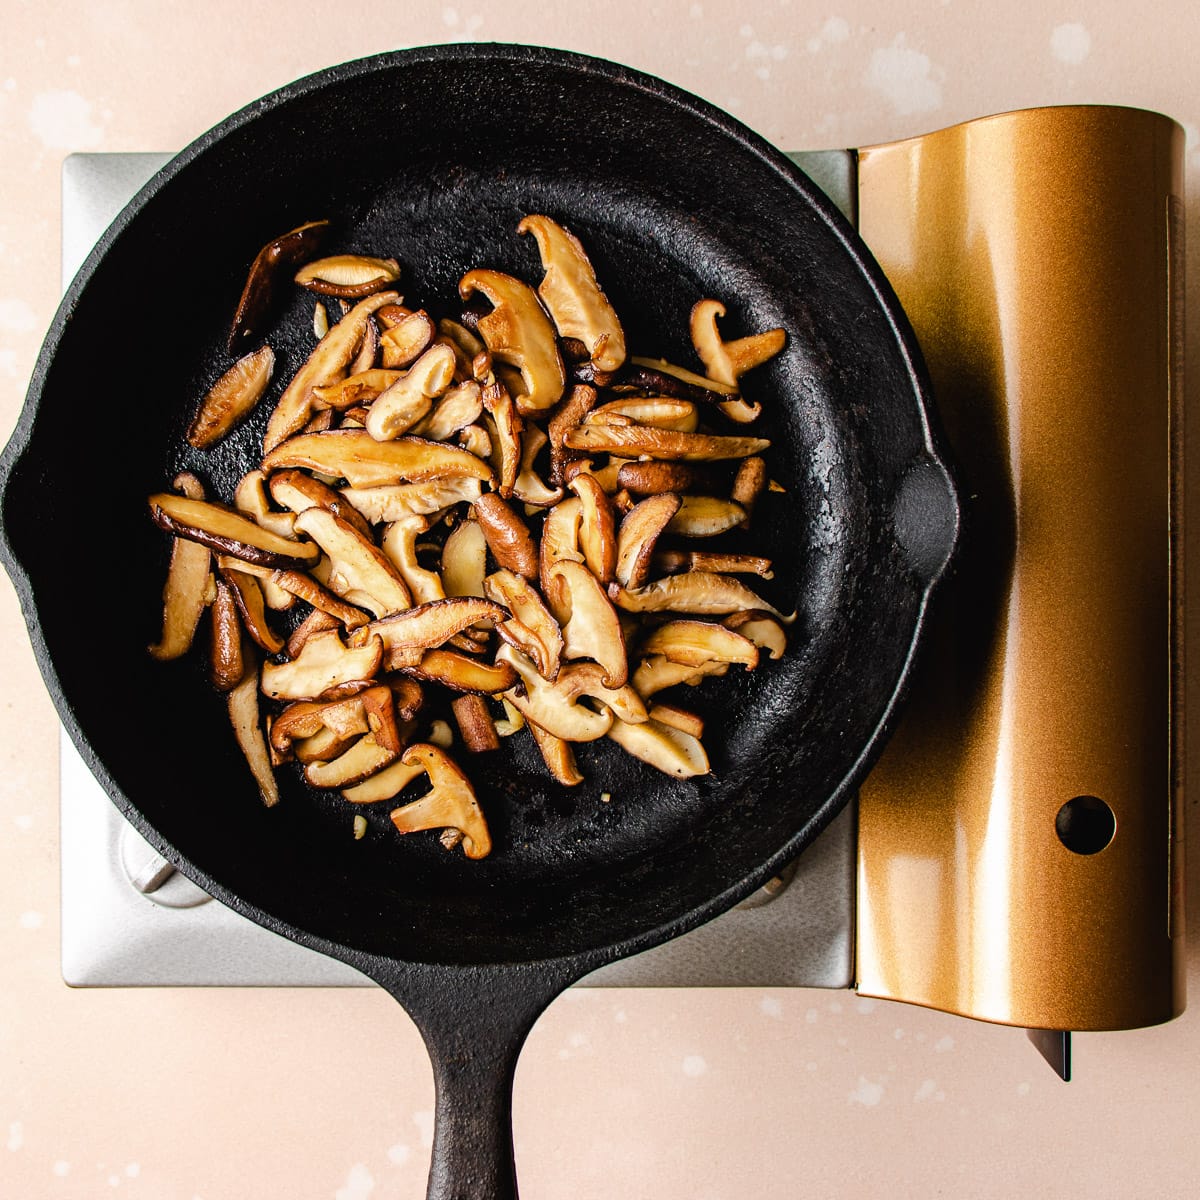 Photo shows sliced shiitake mushrooms saute in a cast iron pan.